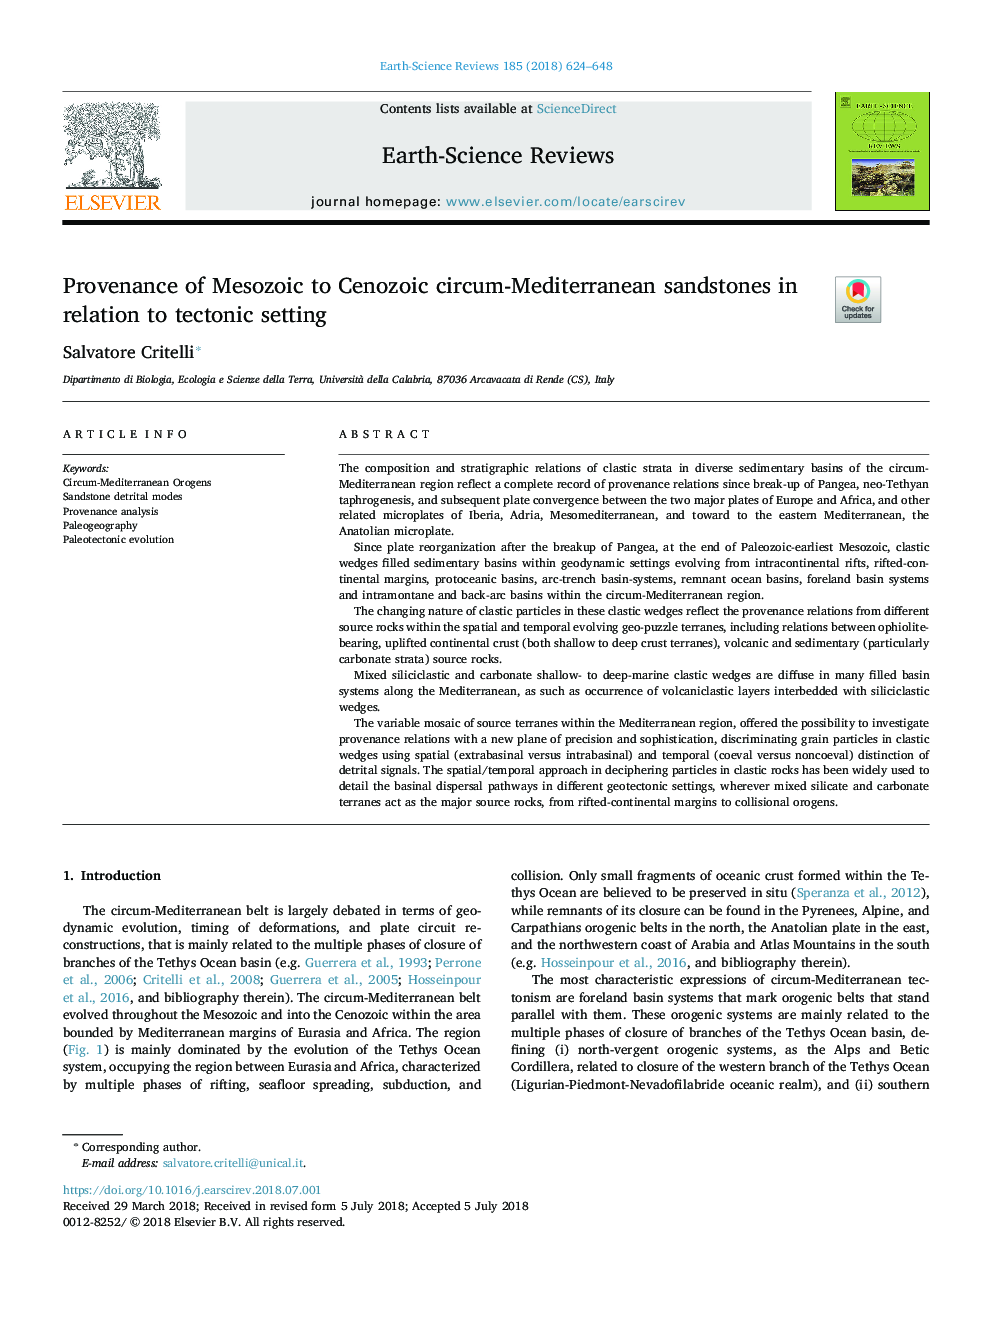 Provenance of Mesozoic to Cenozoic circum-Mediterranean sandstones in relation to tectonic setting